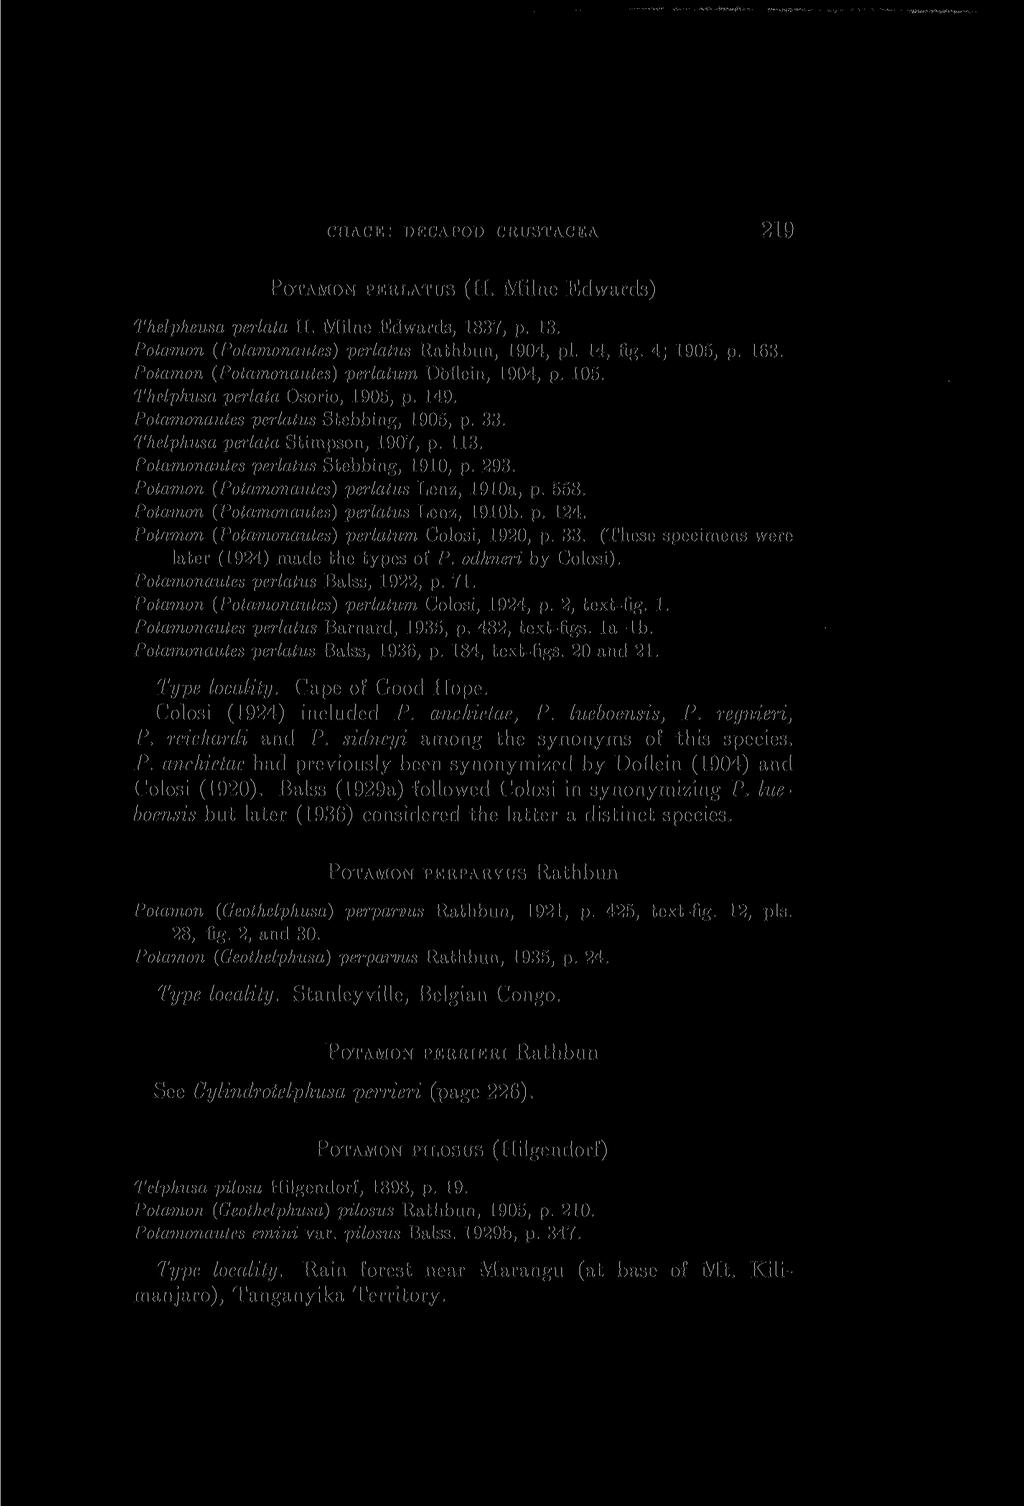 < HACK: DEC APOD CRUSTACEA 219 POTAMON PERLATUS (H. Milne Edwards) Thelpheusa perlata H. Milne Edwards, 1837, p. 13. Potamon (Potamonautes) perlatus Rathbun, 1904, pi. 14, fig. 4; 1905, p. 163.